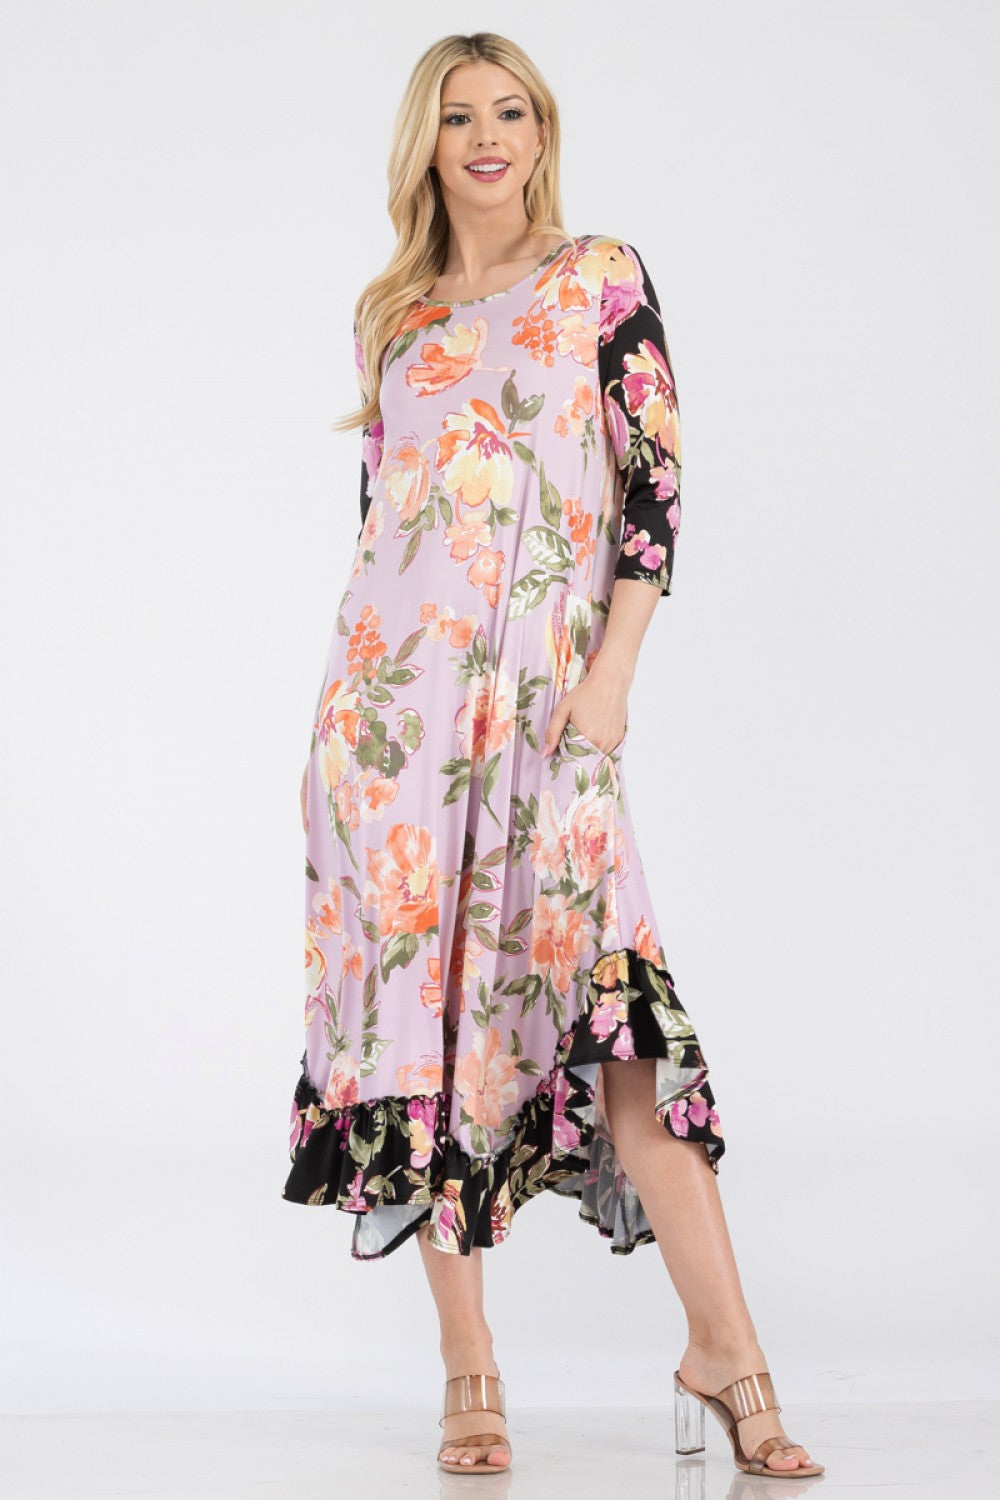 Jeannie Dress- Mauve Floral Print Dress